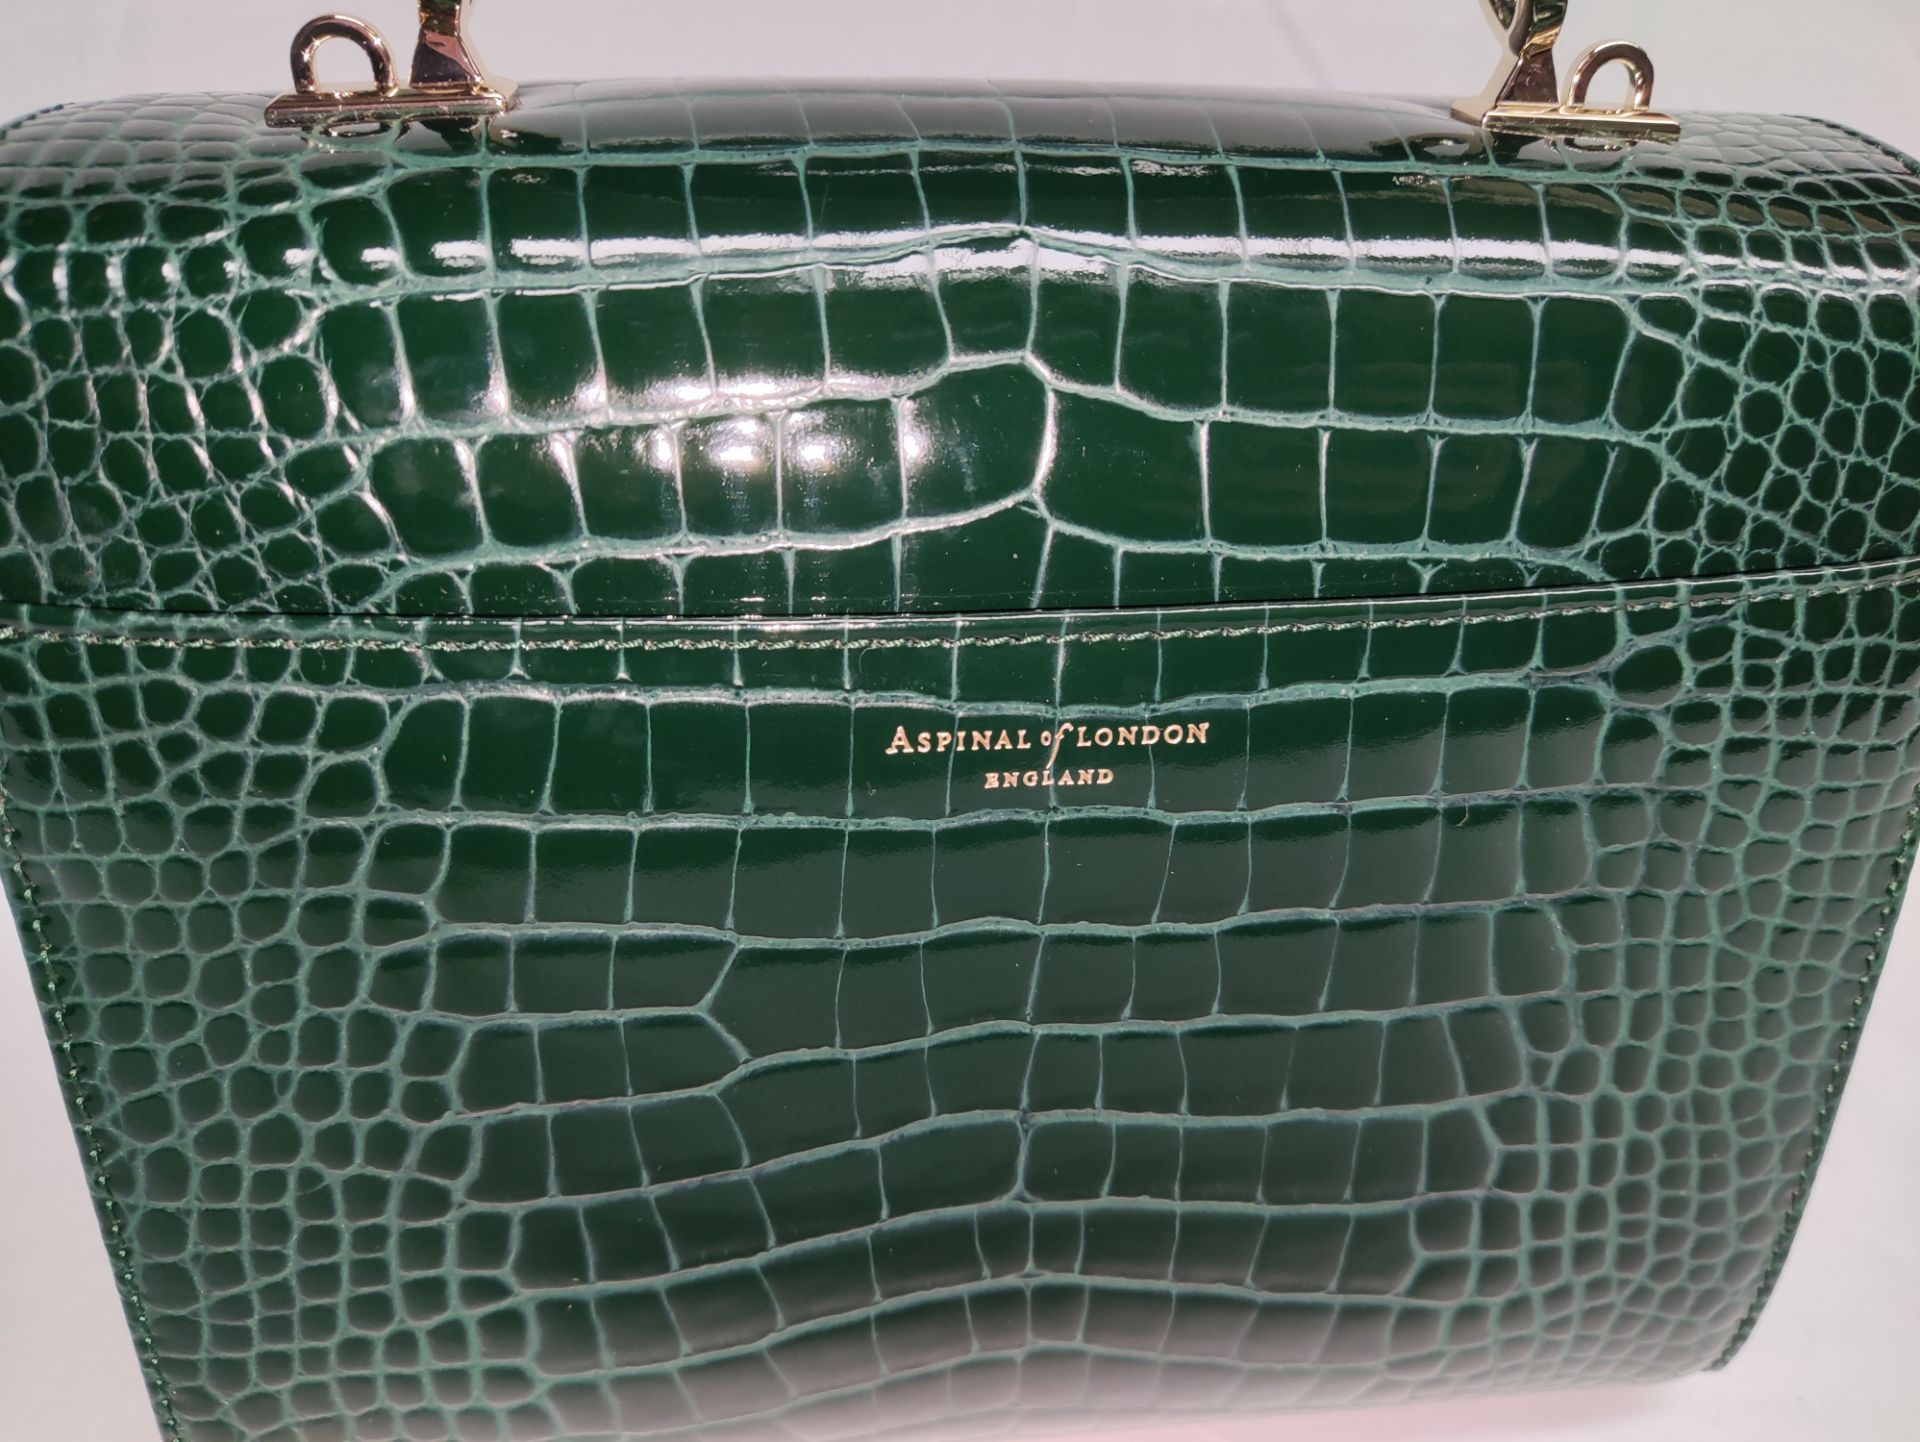 1 x ASPINAL OF LONDON Mayfair Bag - Evergreen Patent Croc - Original RRP £695.00 - Image 7 of 23